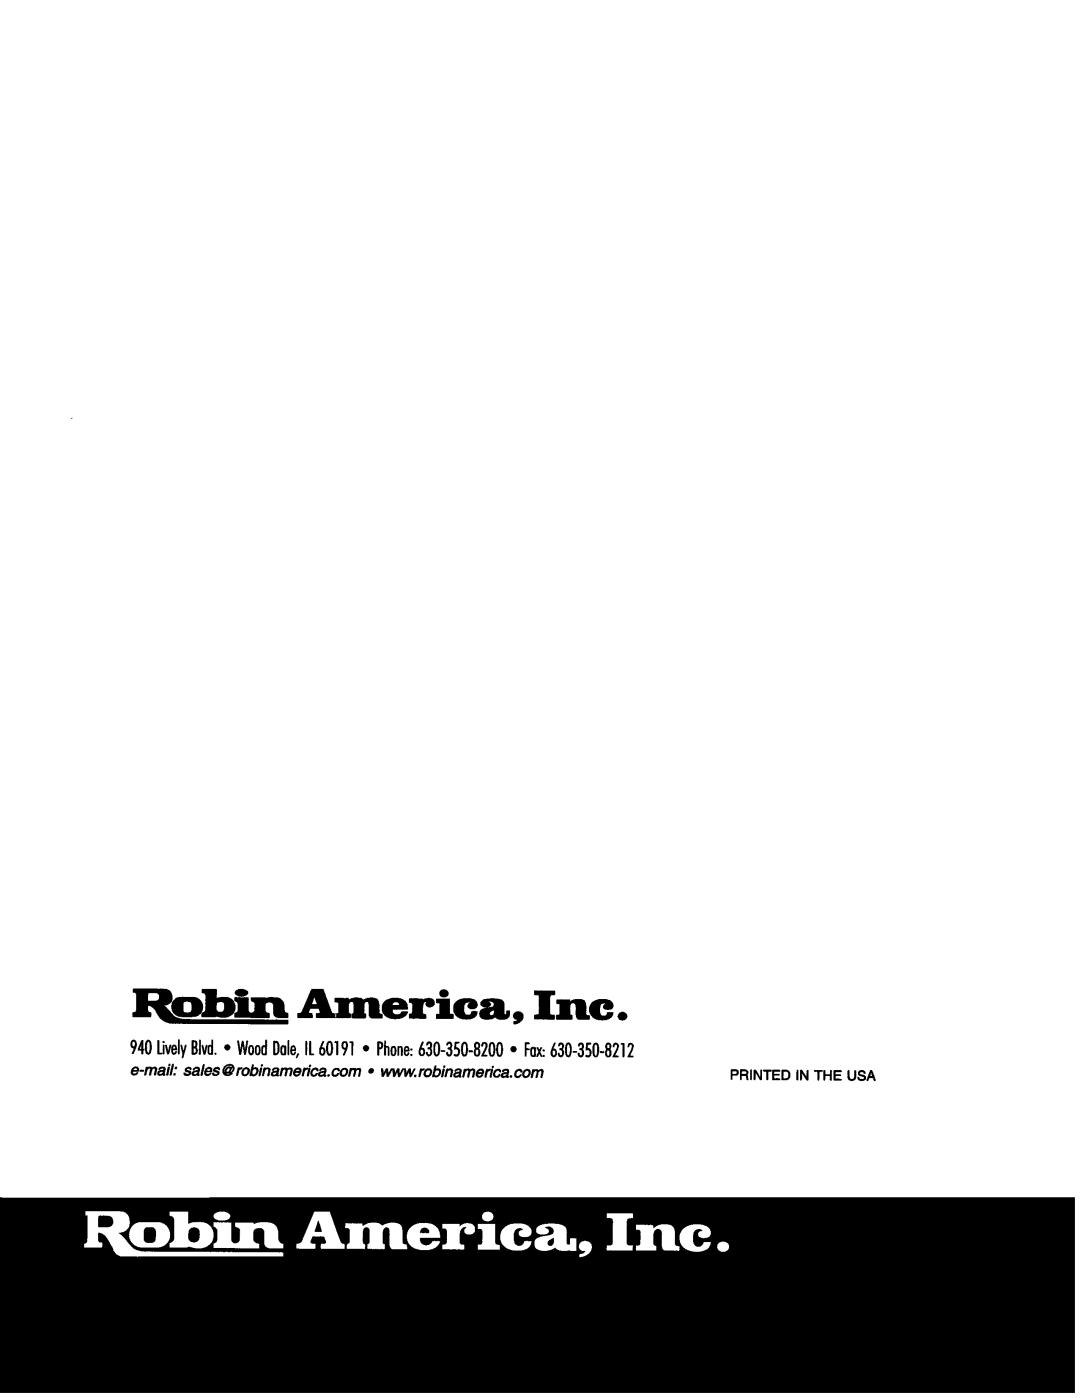 Subaru Robin Power Products R600 R -America, wwwrobinamerica. com, e-mail:sales @robinamerica.com, Printed In The Usa 